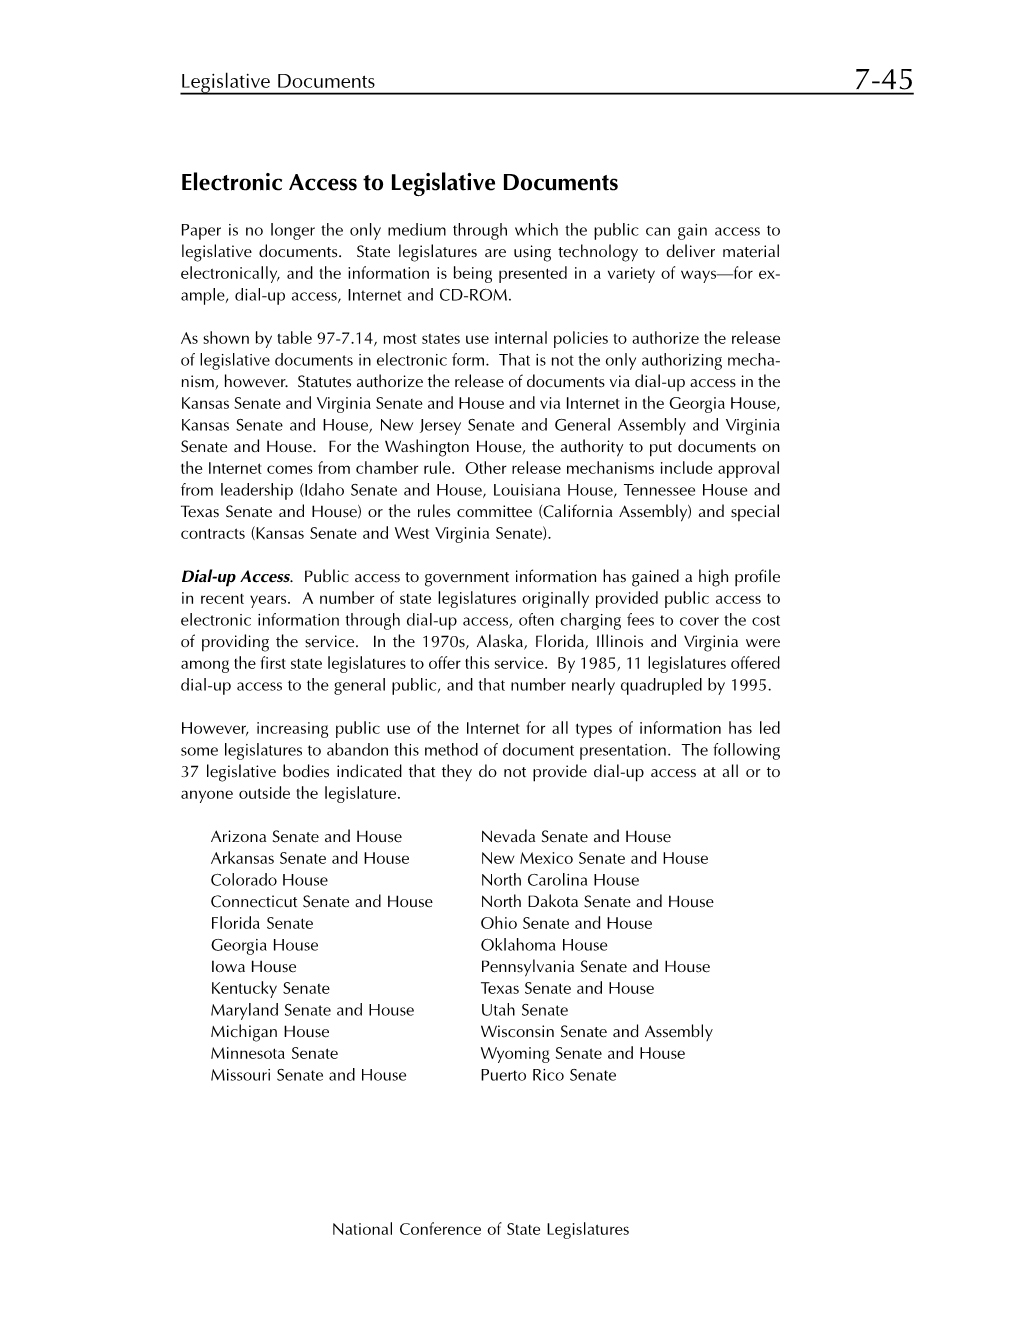 Electronic Access to Legislative Documents